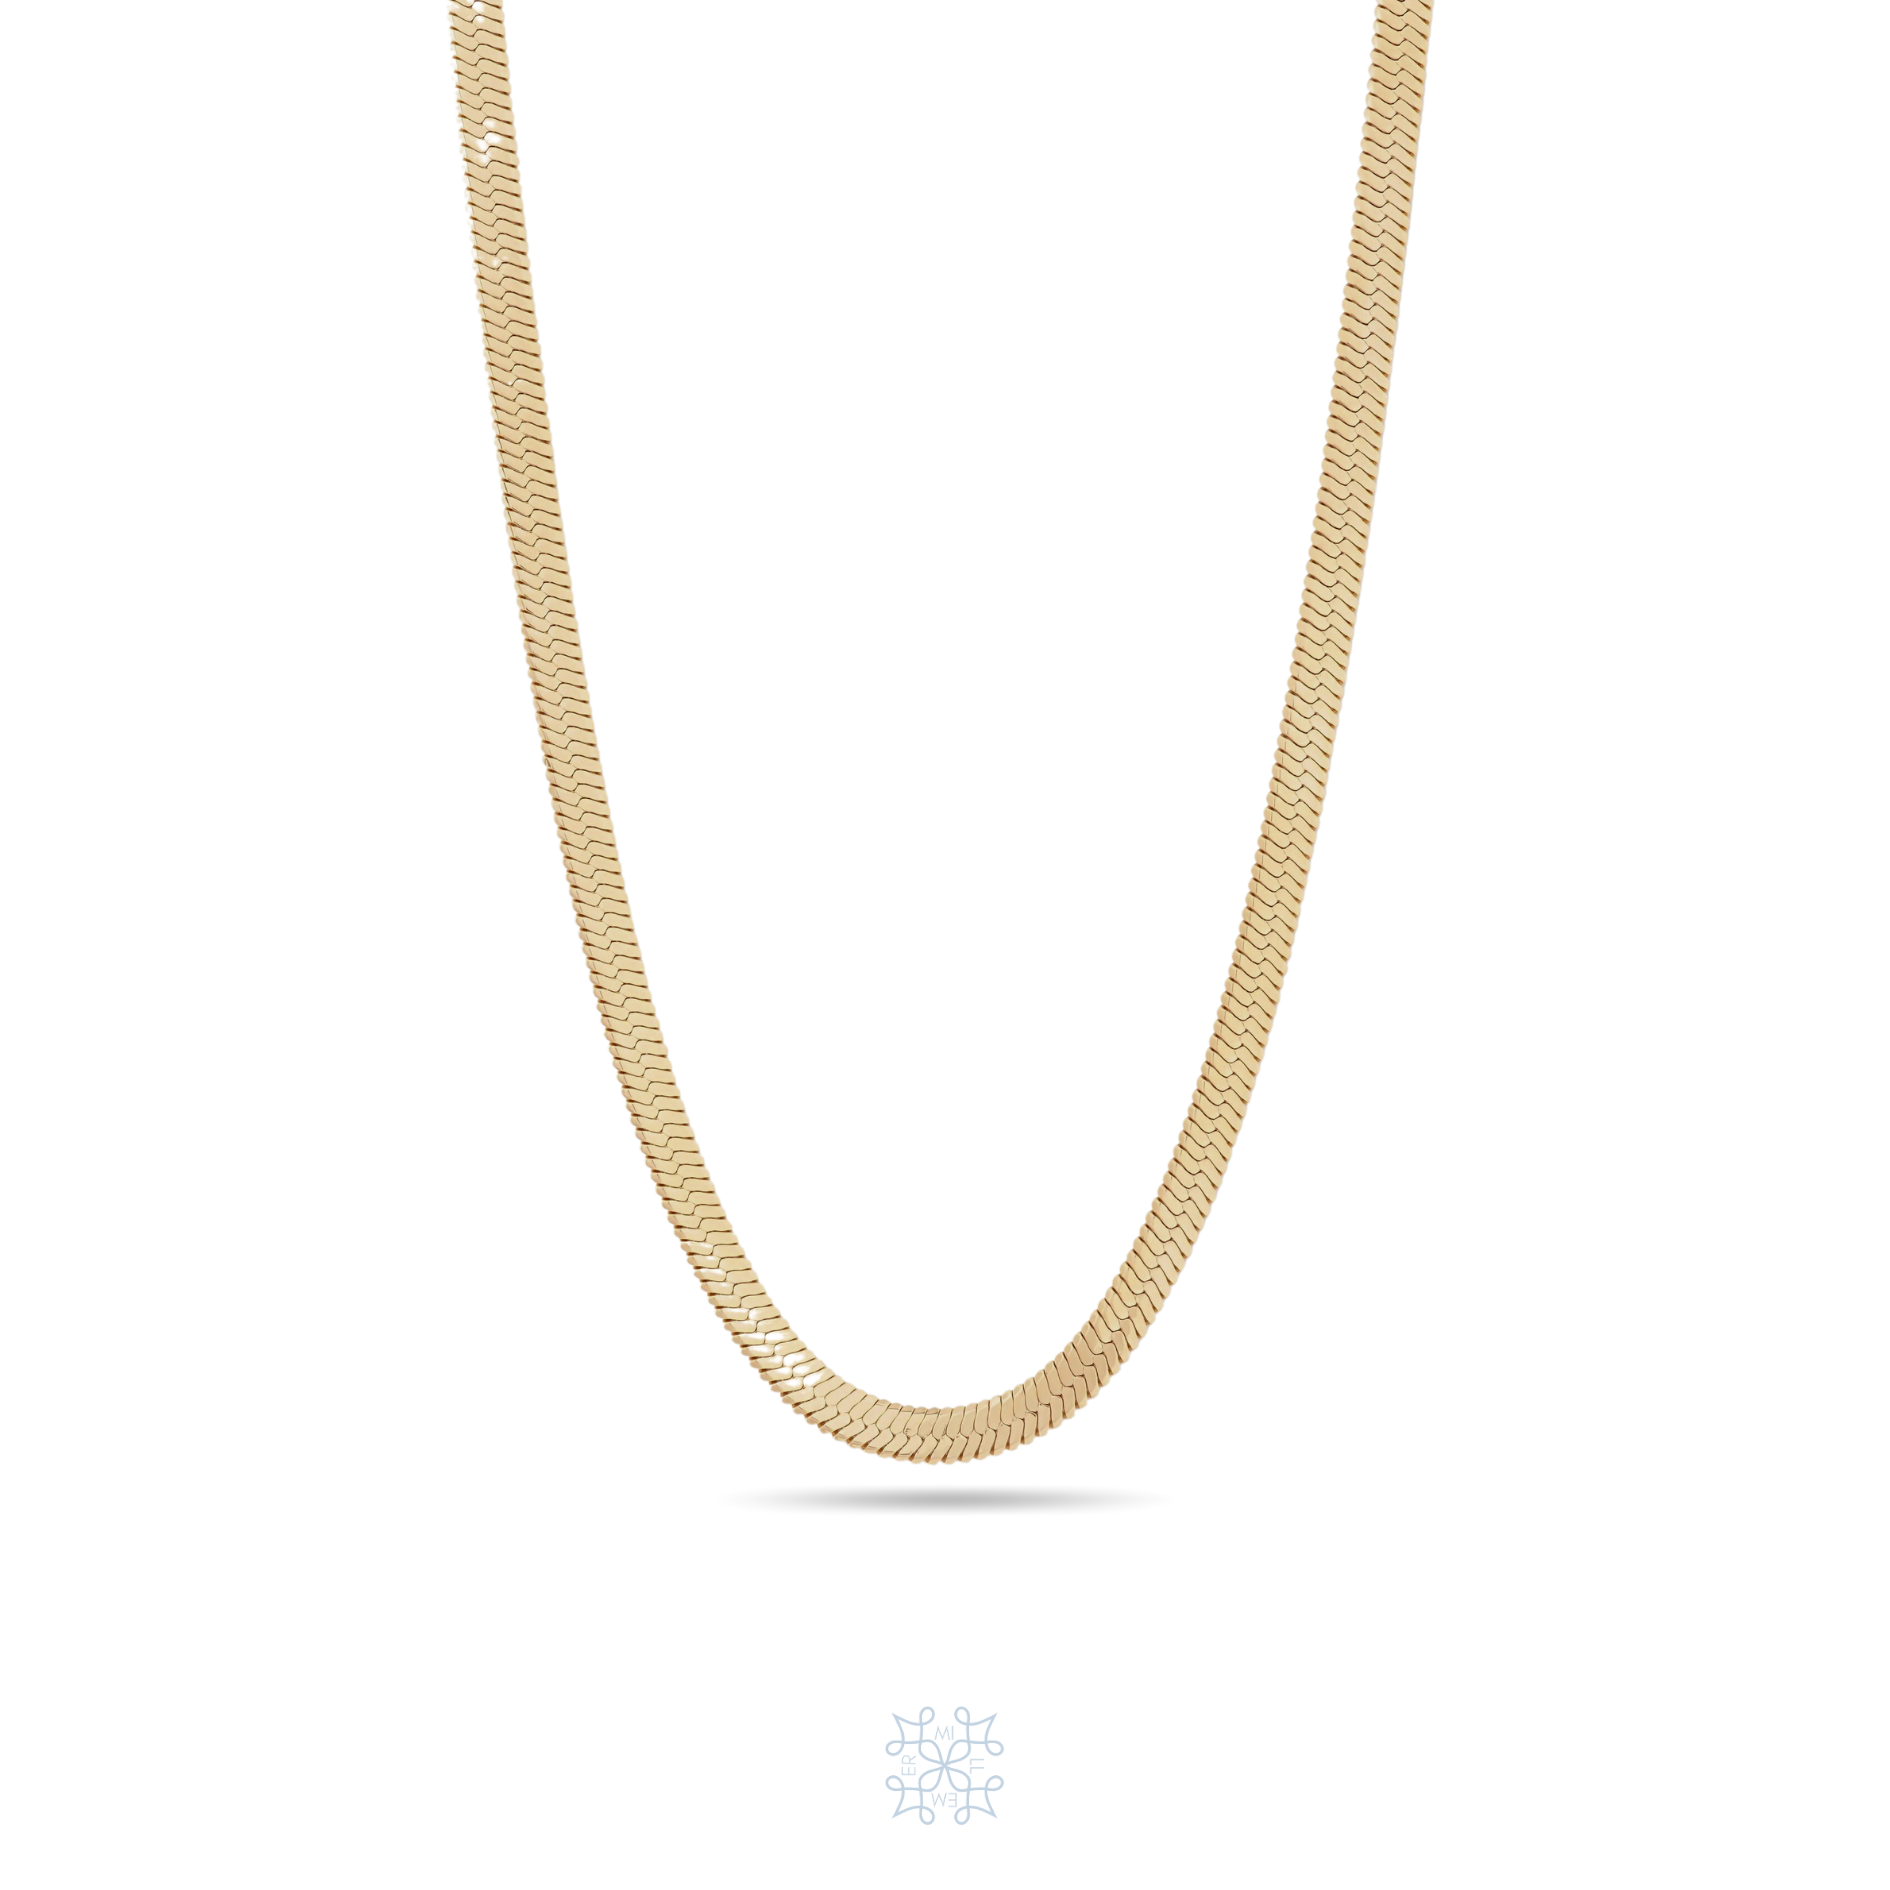 Herringbone gold chain. Long version. five mm width. HERRINGBONE LONG GOLD CHAIN NECKLACE